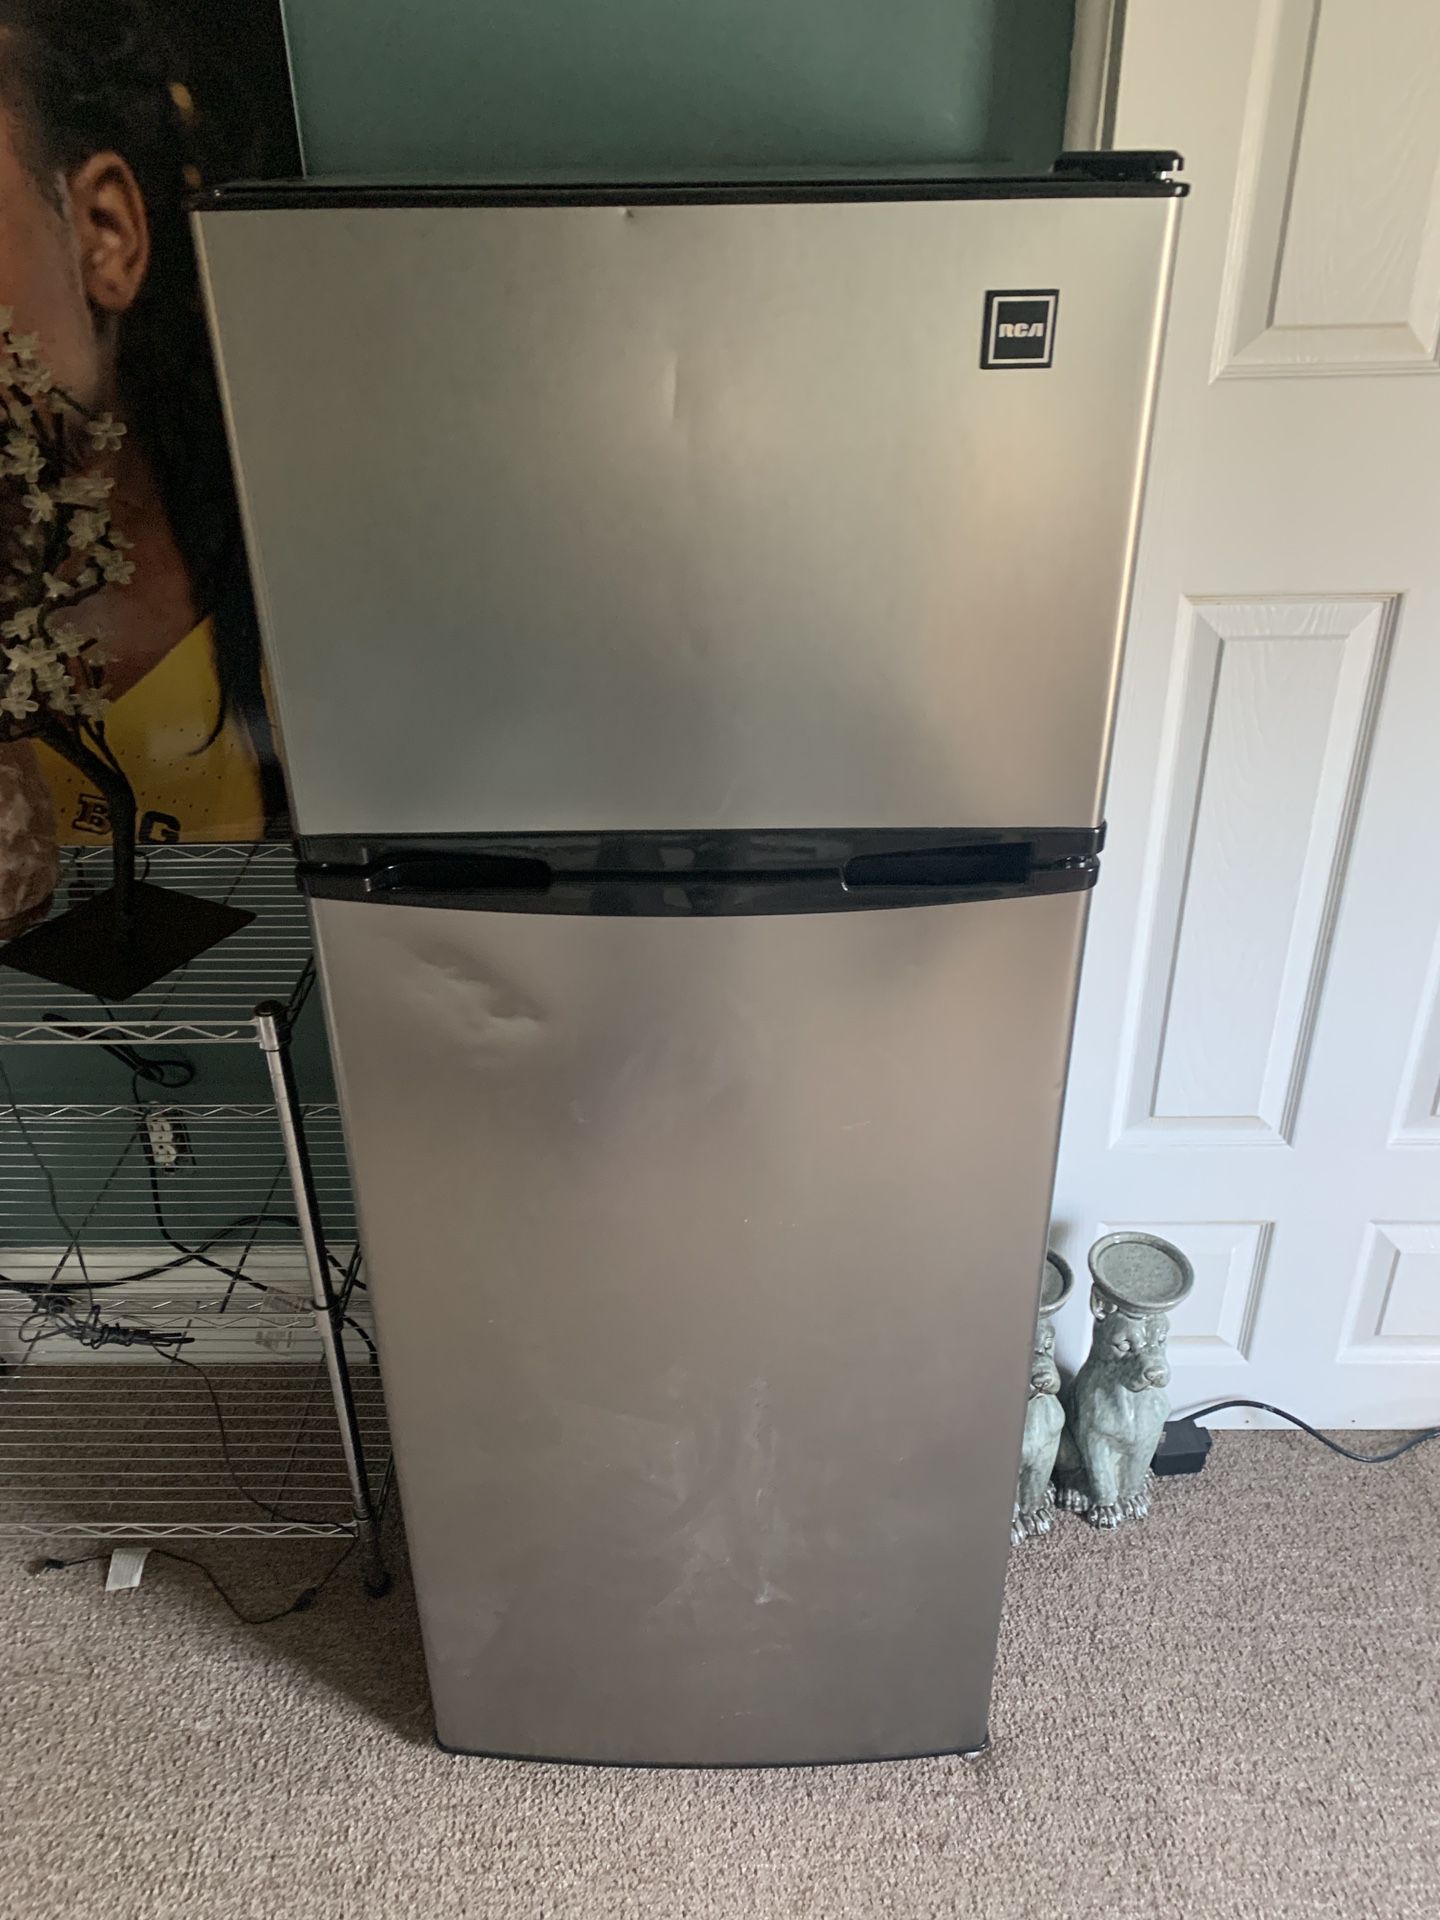 New 7.5 cubic feet refrigerator (RCA)